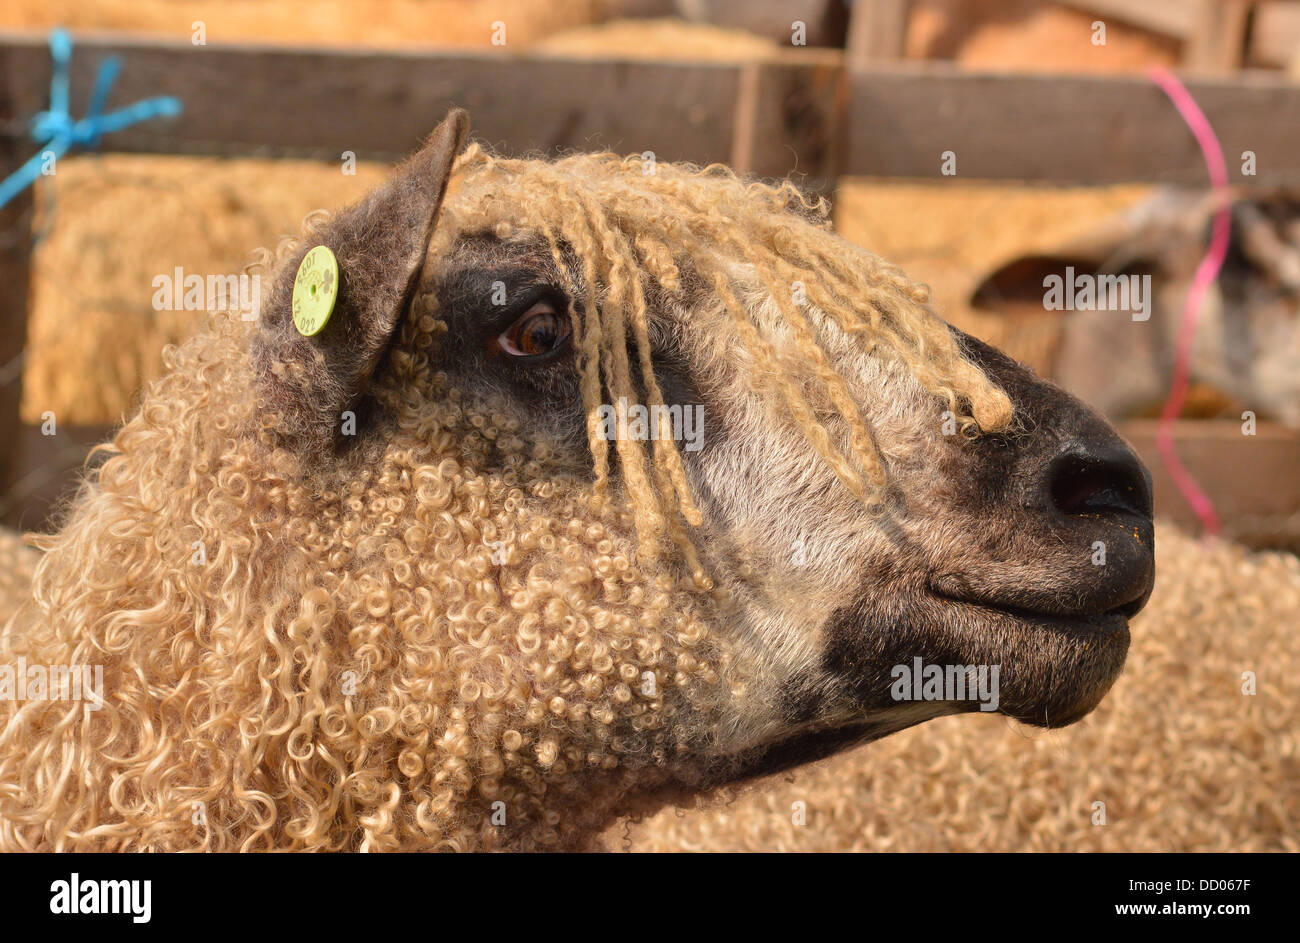 Teeswater sheep head profile - woolly fleece Stock Photo